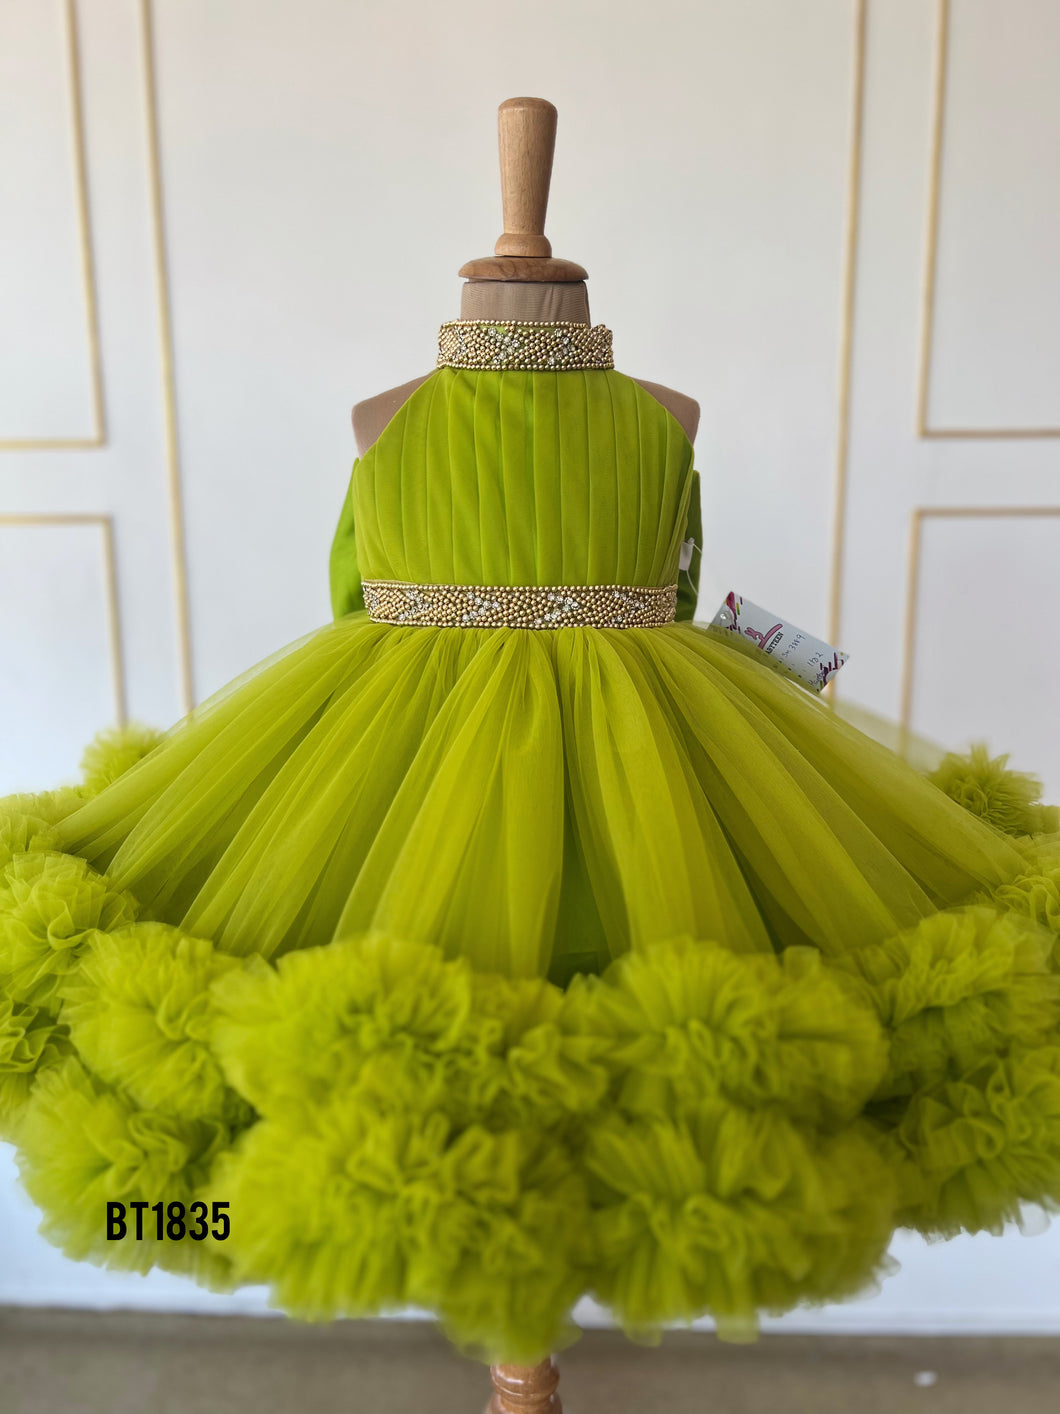 BT1835 Lime Light Gala Dress - A Zestful Touch for Celebrations